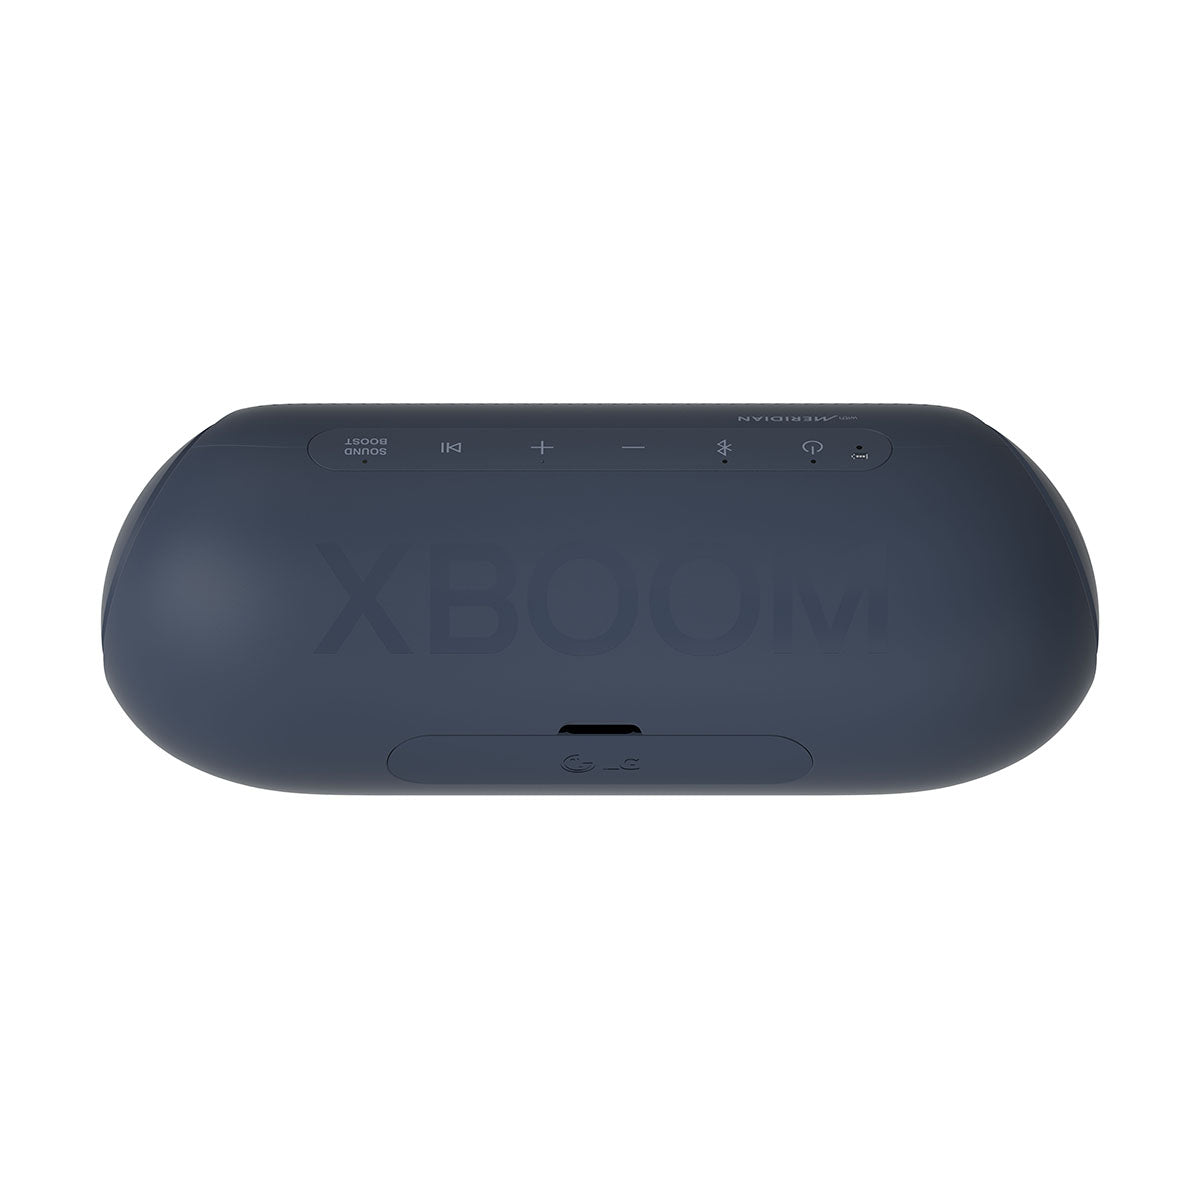 LG 20W XBOOM Go Portable Bluetooth Speaker With Meridian Audio Technology  - Black